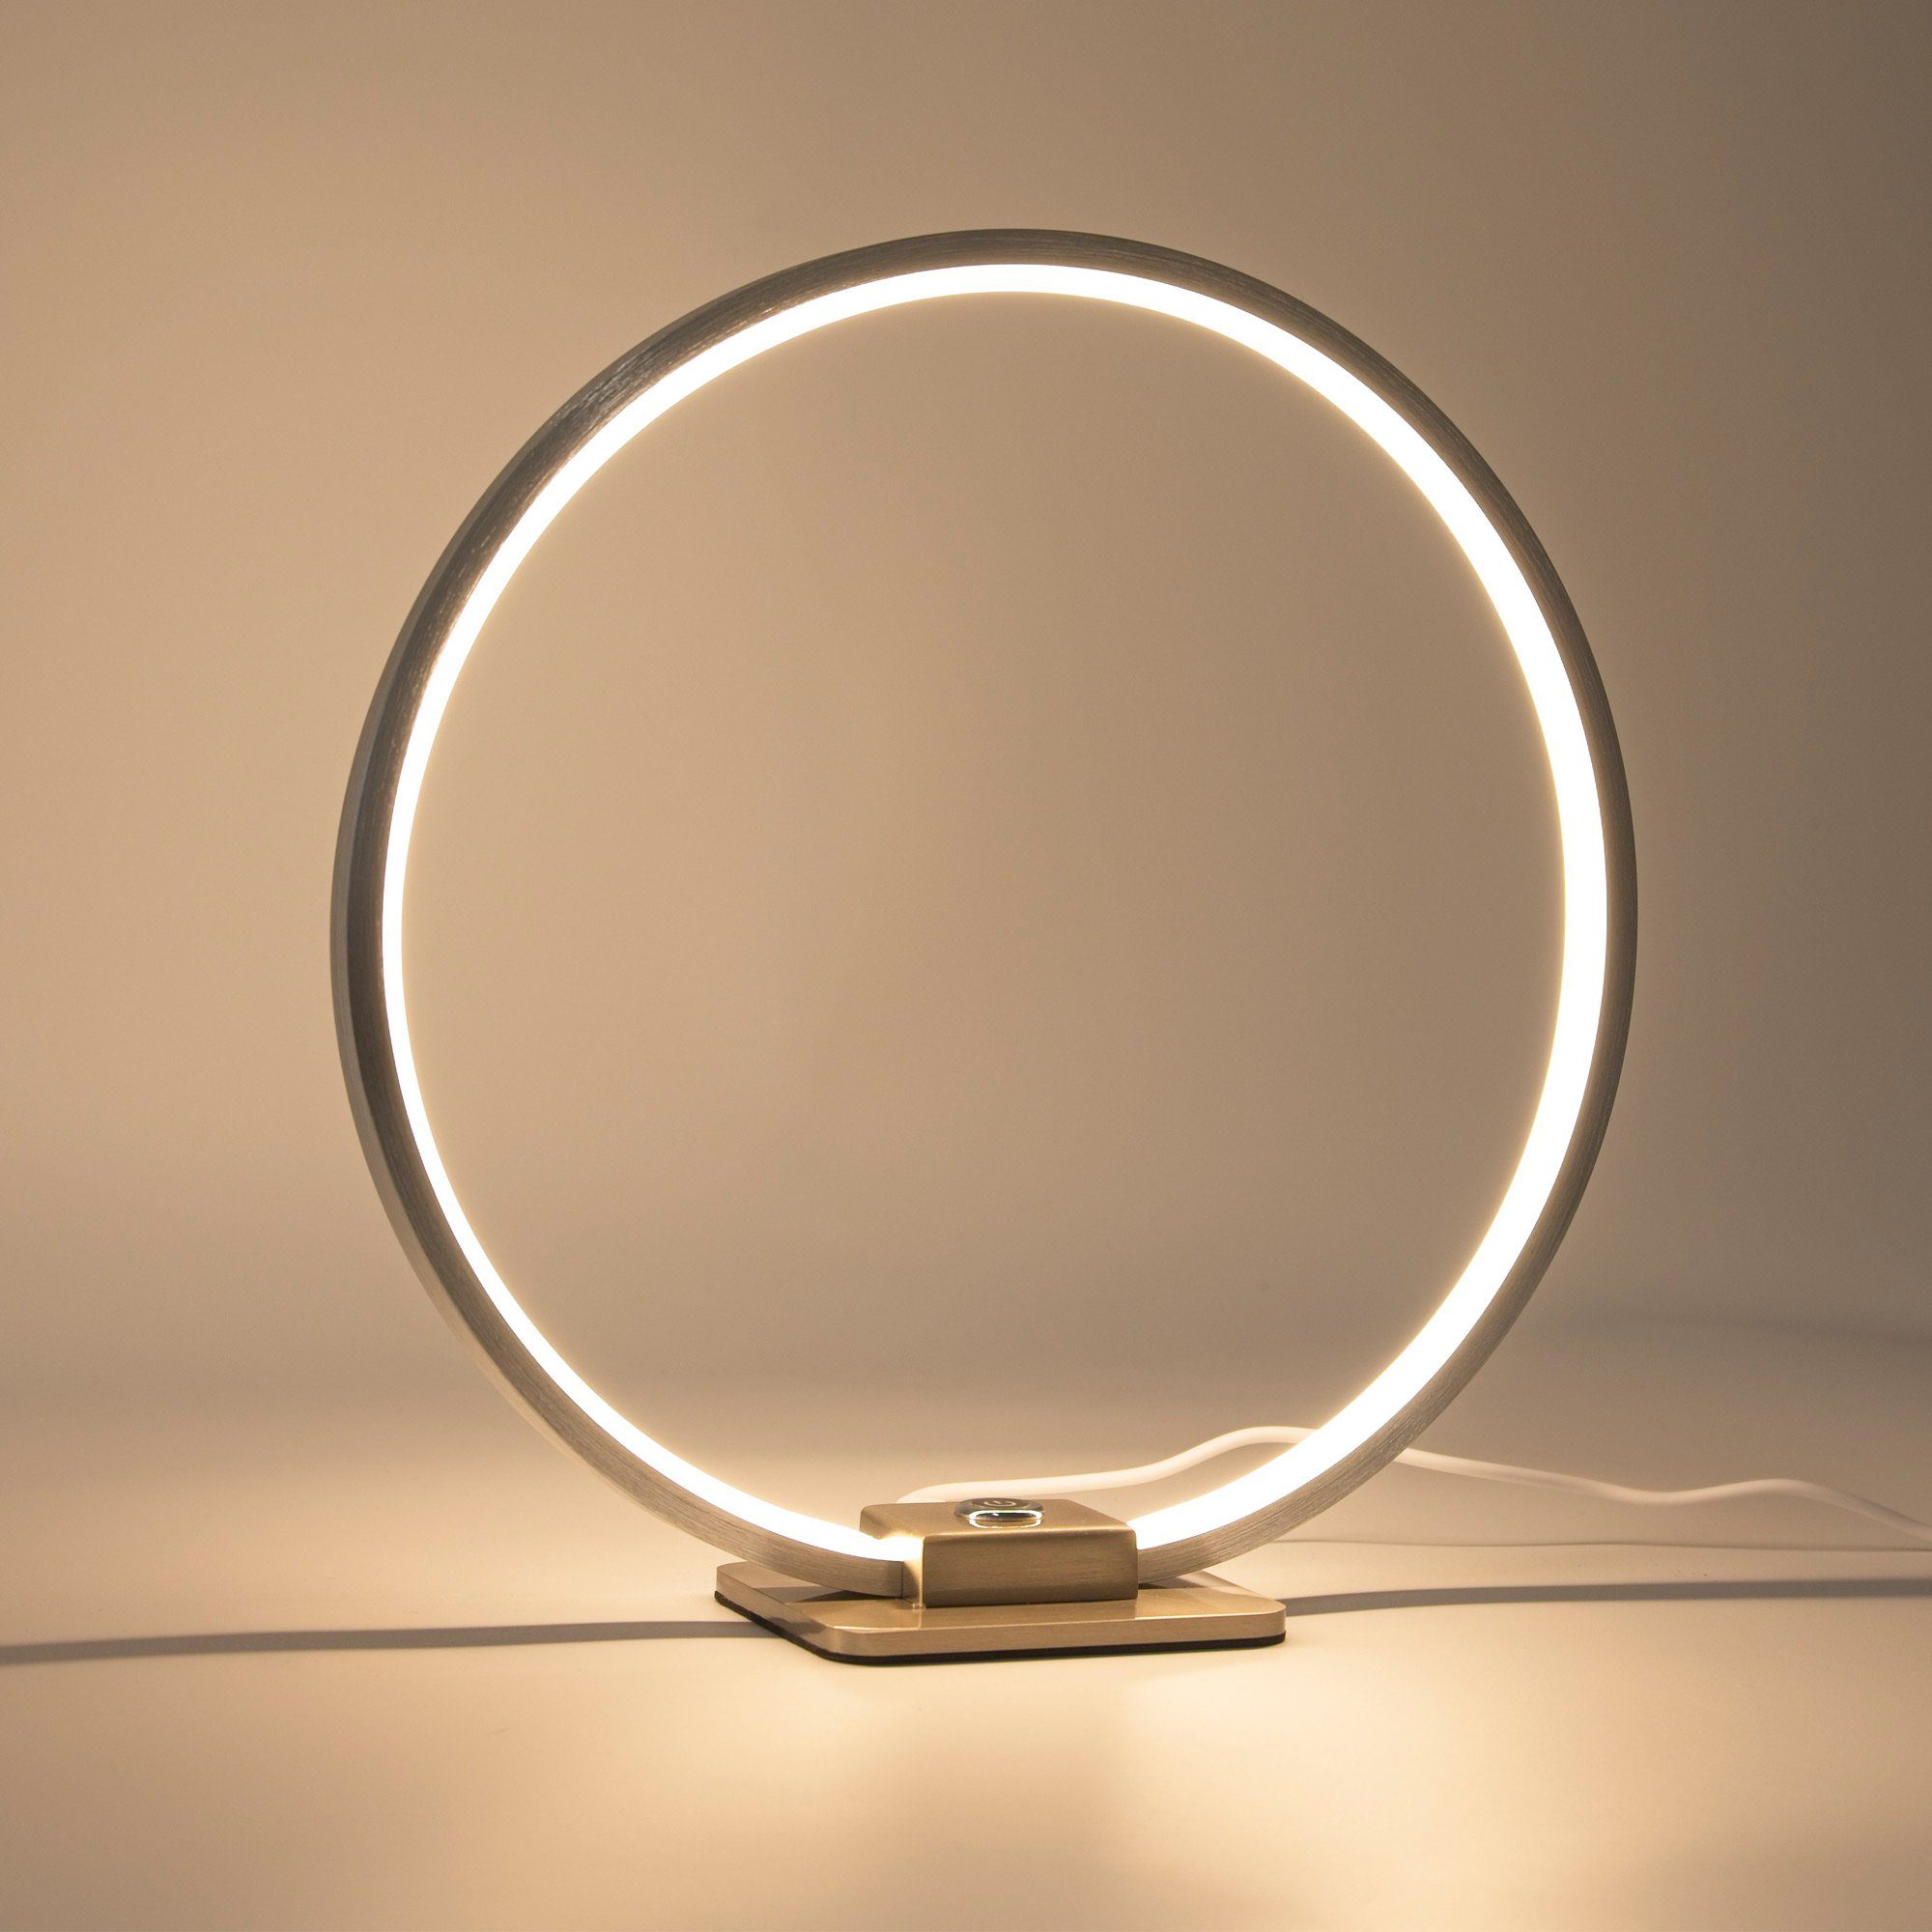 VBLED LED Tischleuchte Dekorative LED Tischleuchte Ringform, Ø 28cm, 15W 3000K 430lm 300°, Aluminium, Silber, LED fest integriert, Warmweiß